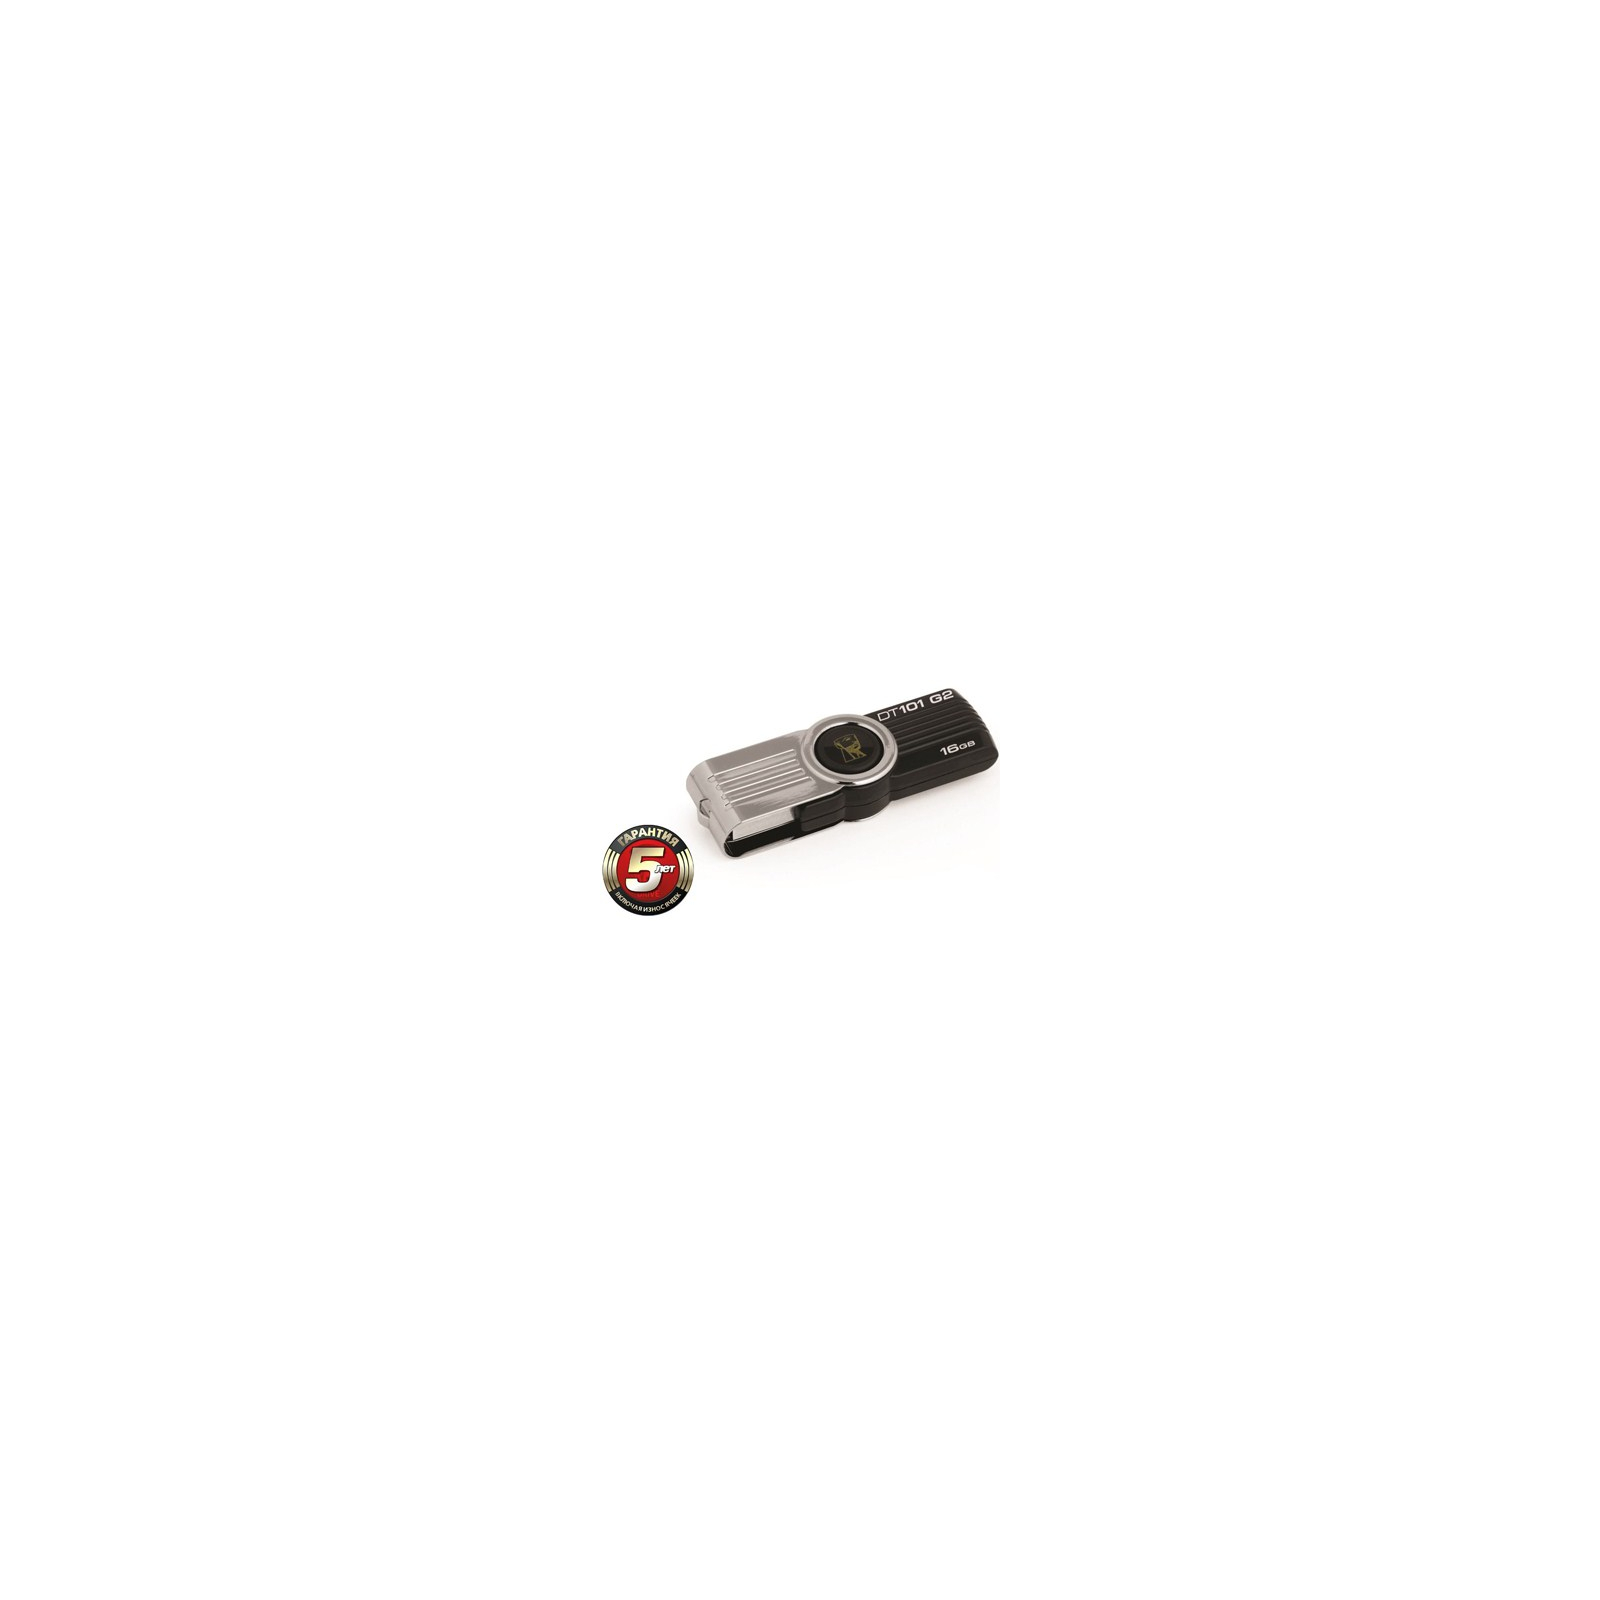 USB флеш накопитель Kingston 16Gb DataTraveler 101 G2 (DT101G2/16GB)